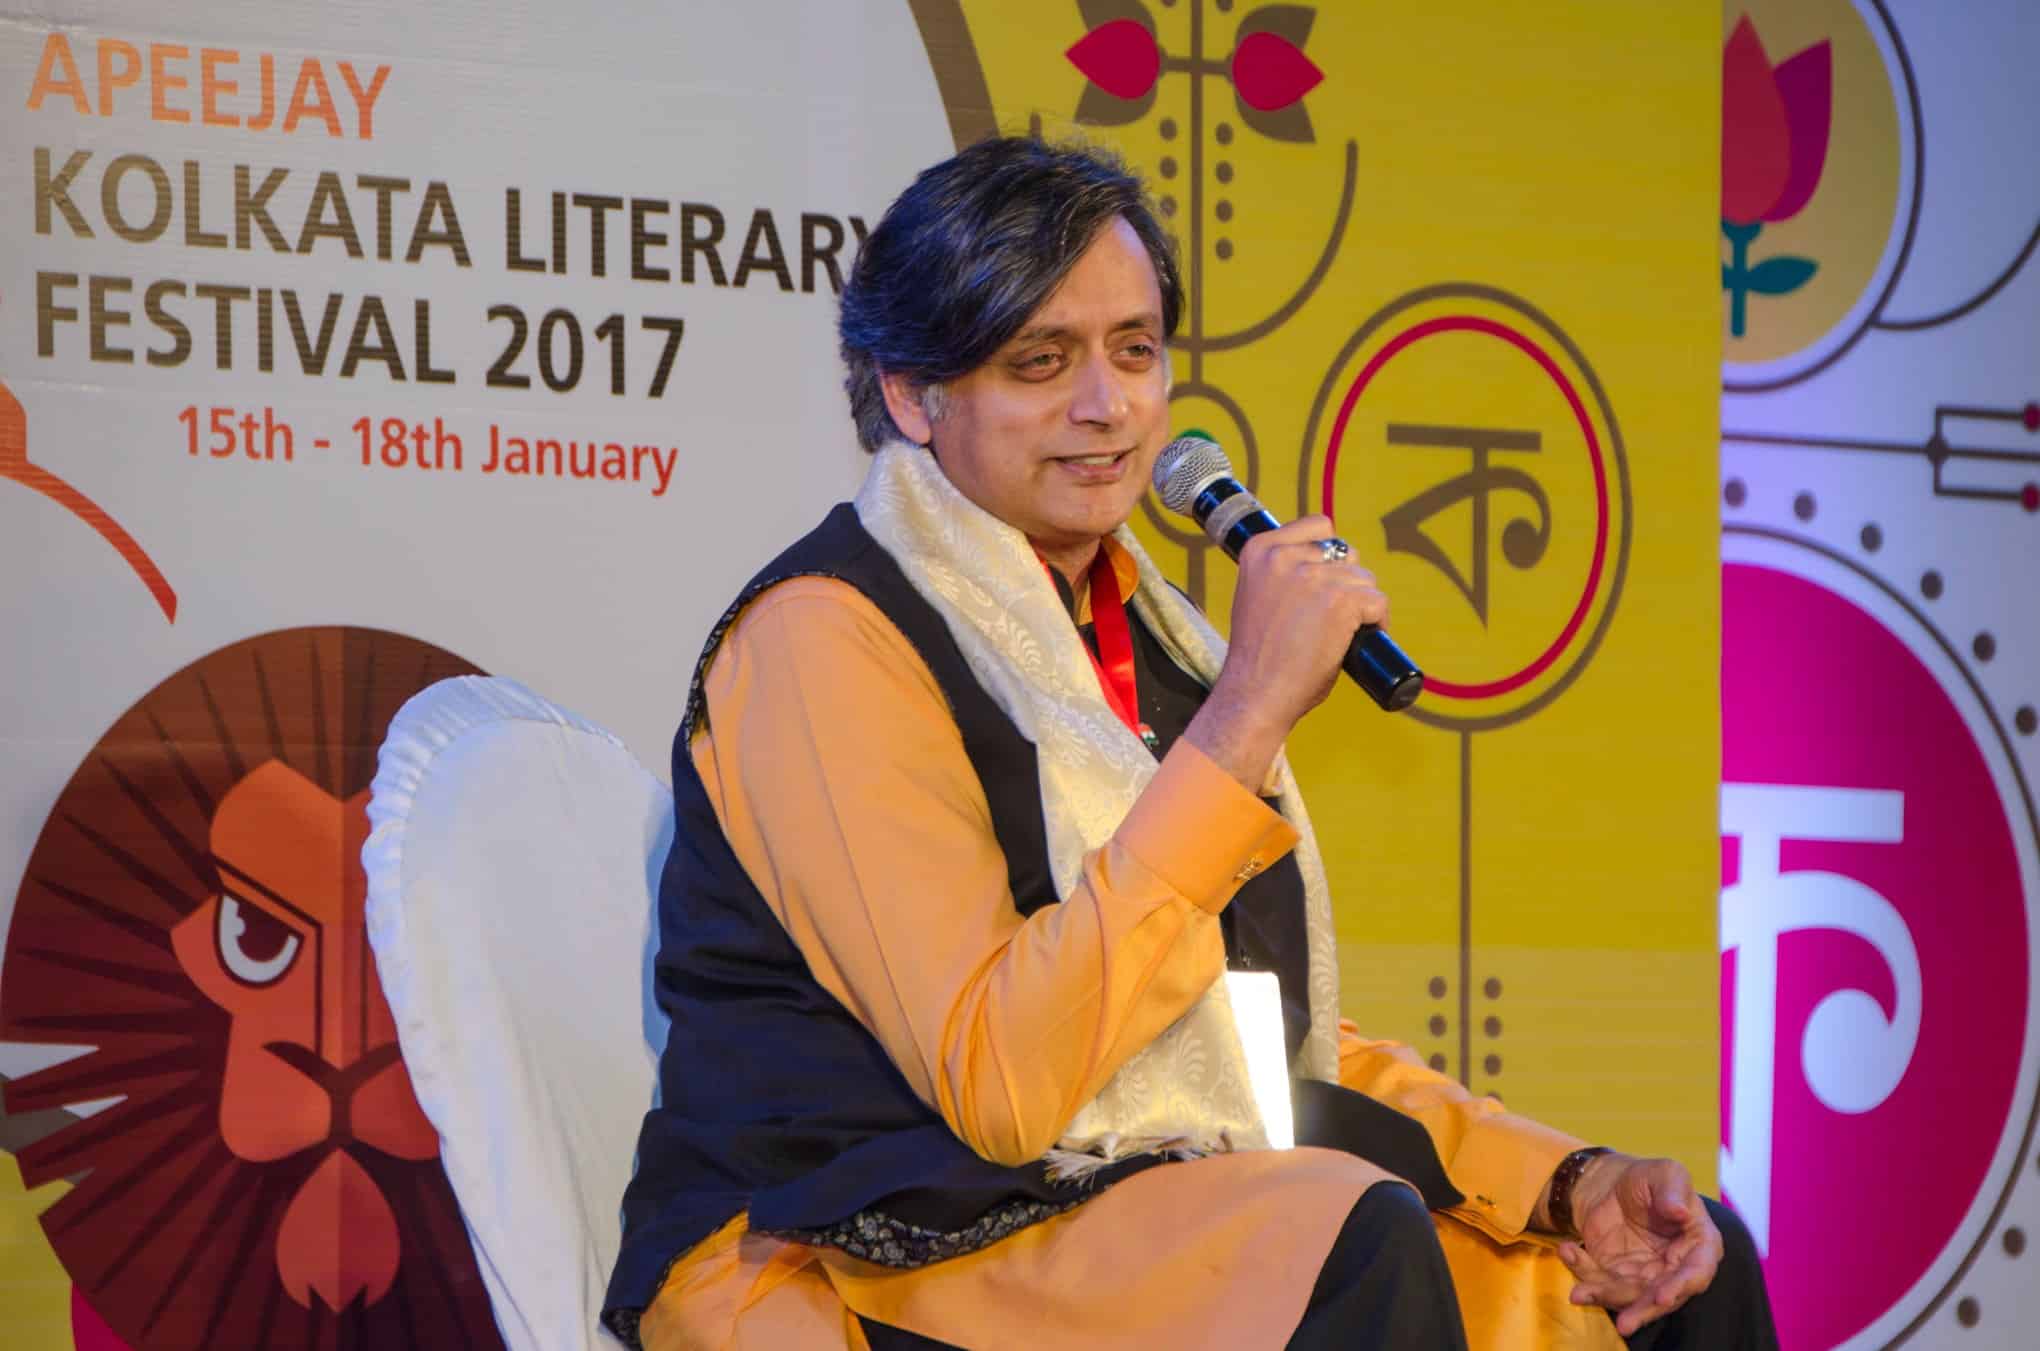 Indian politician and writer Shashi Tharoor at Apeejay Kolkata Literary Festival 2017. Photo: Oxford Bookstore